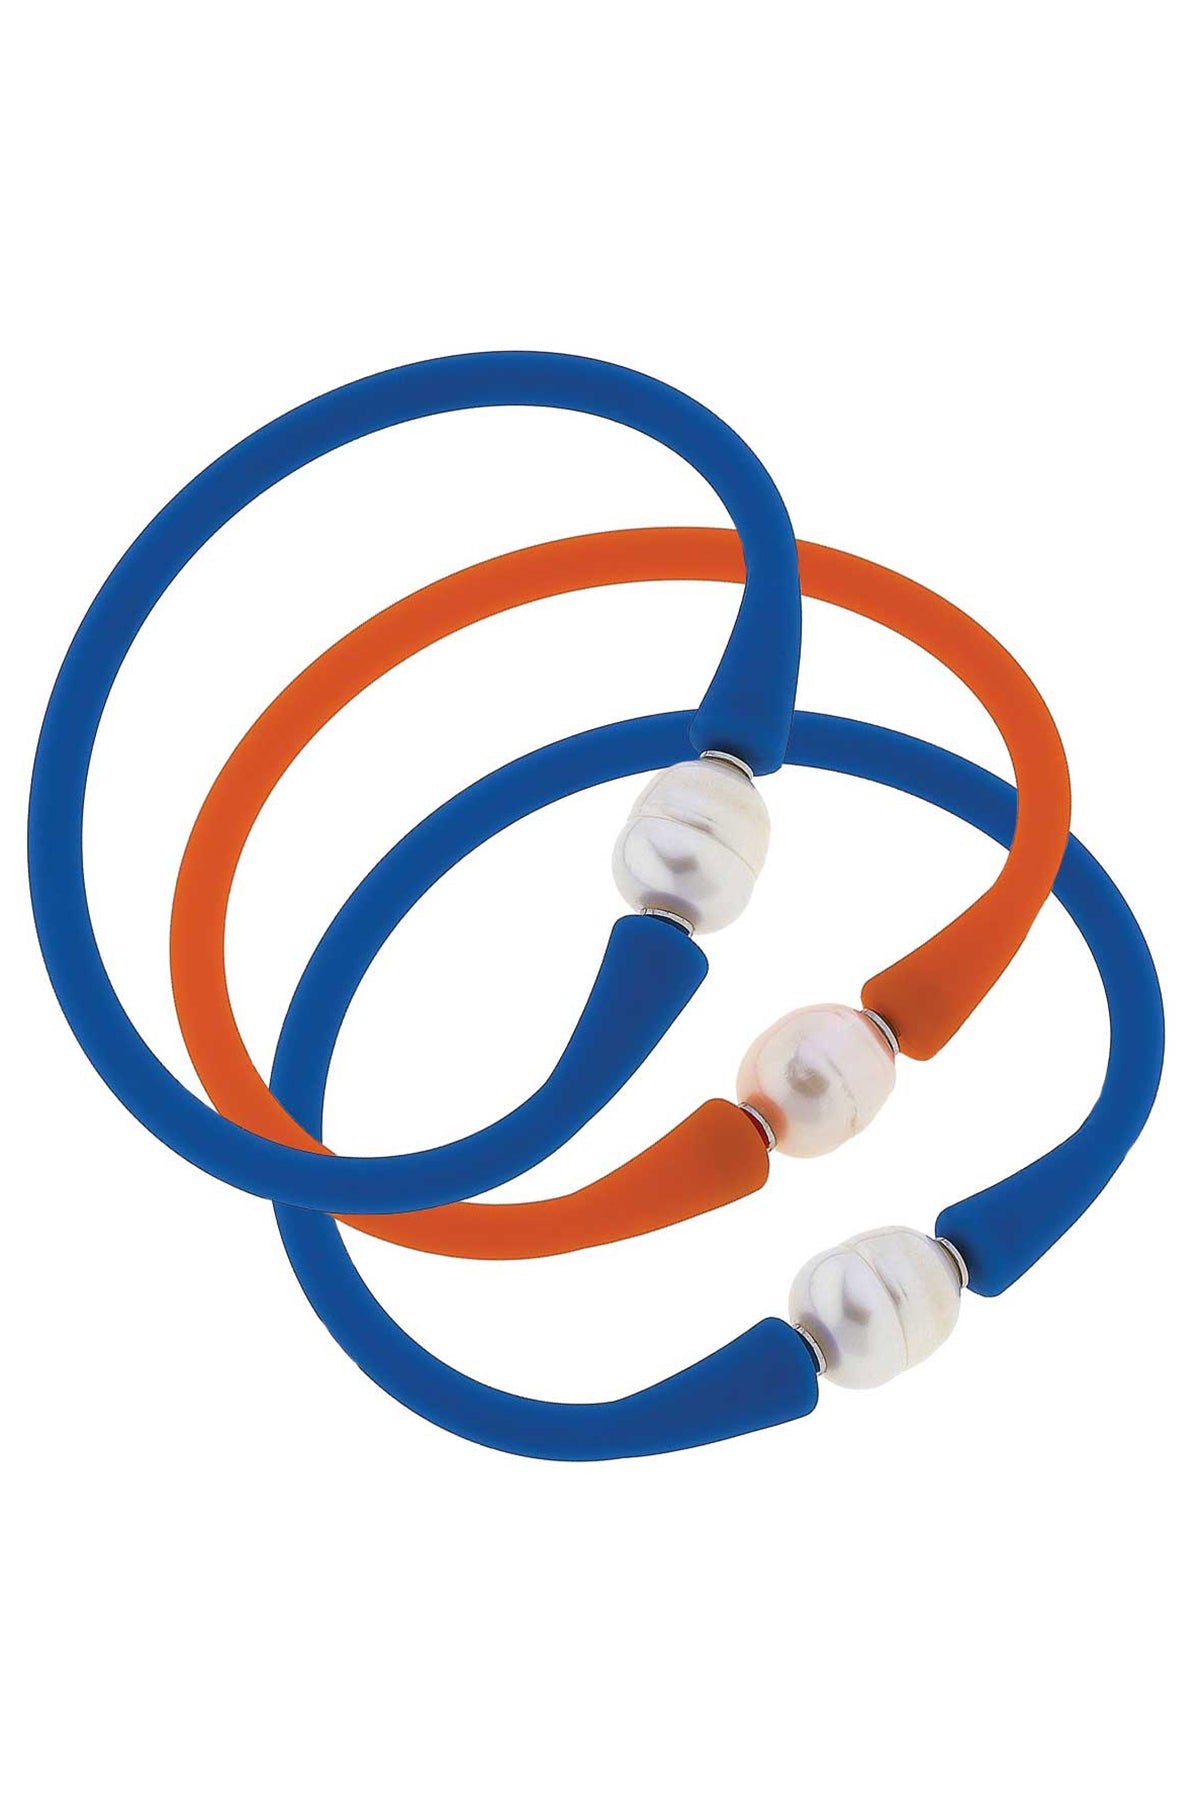 Bali Game Day Bracelet Set of 3 in Blue & Orange